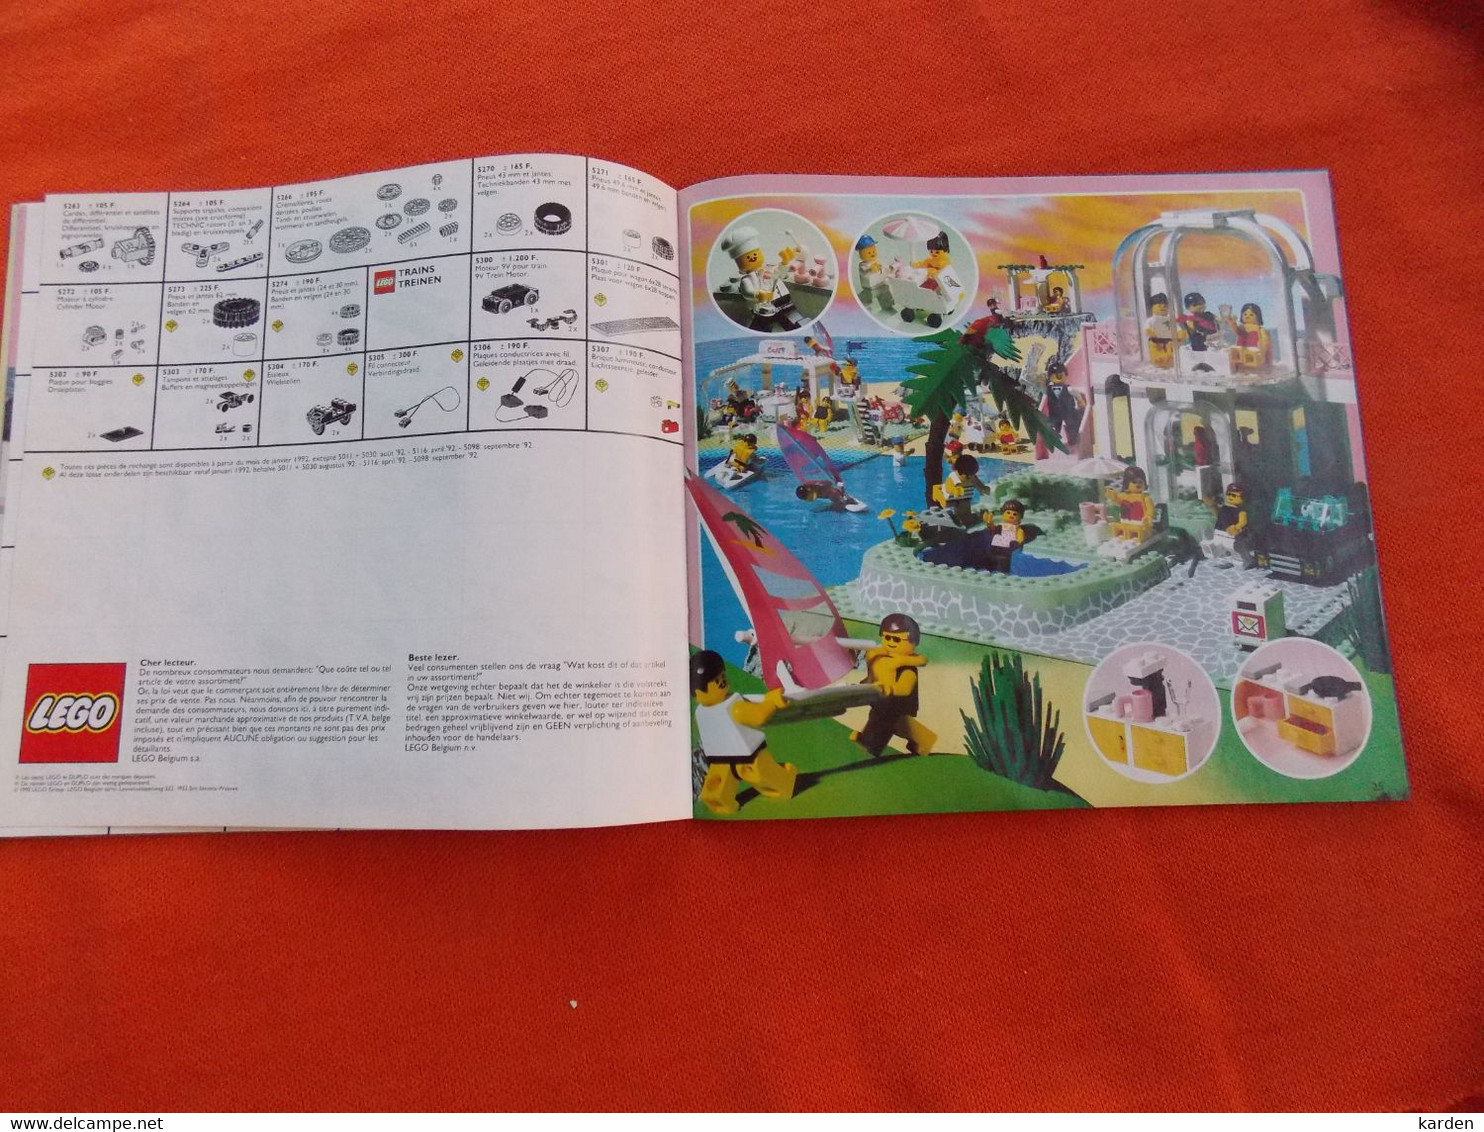 Lego catalogus1992